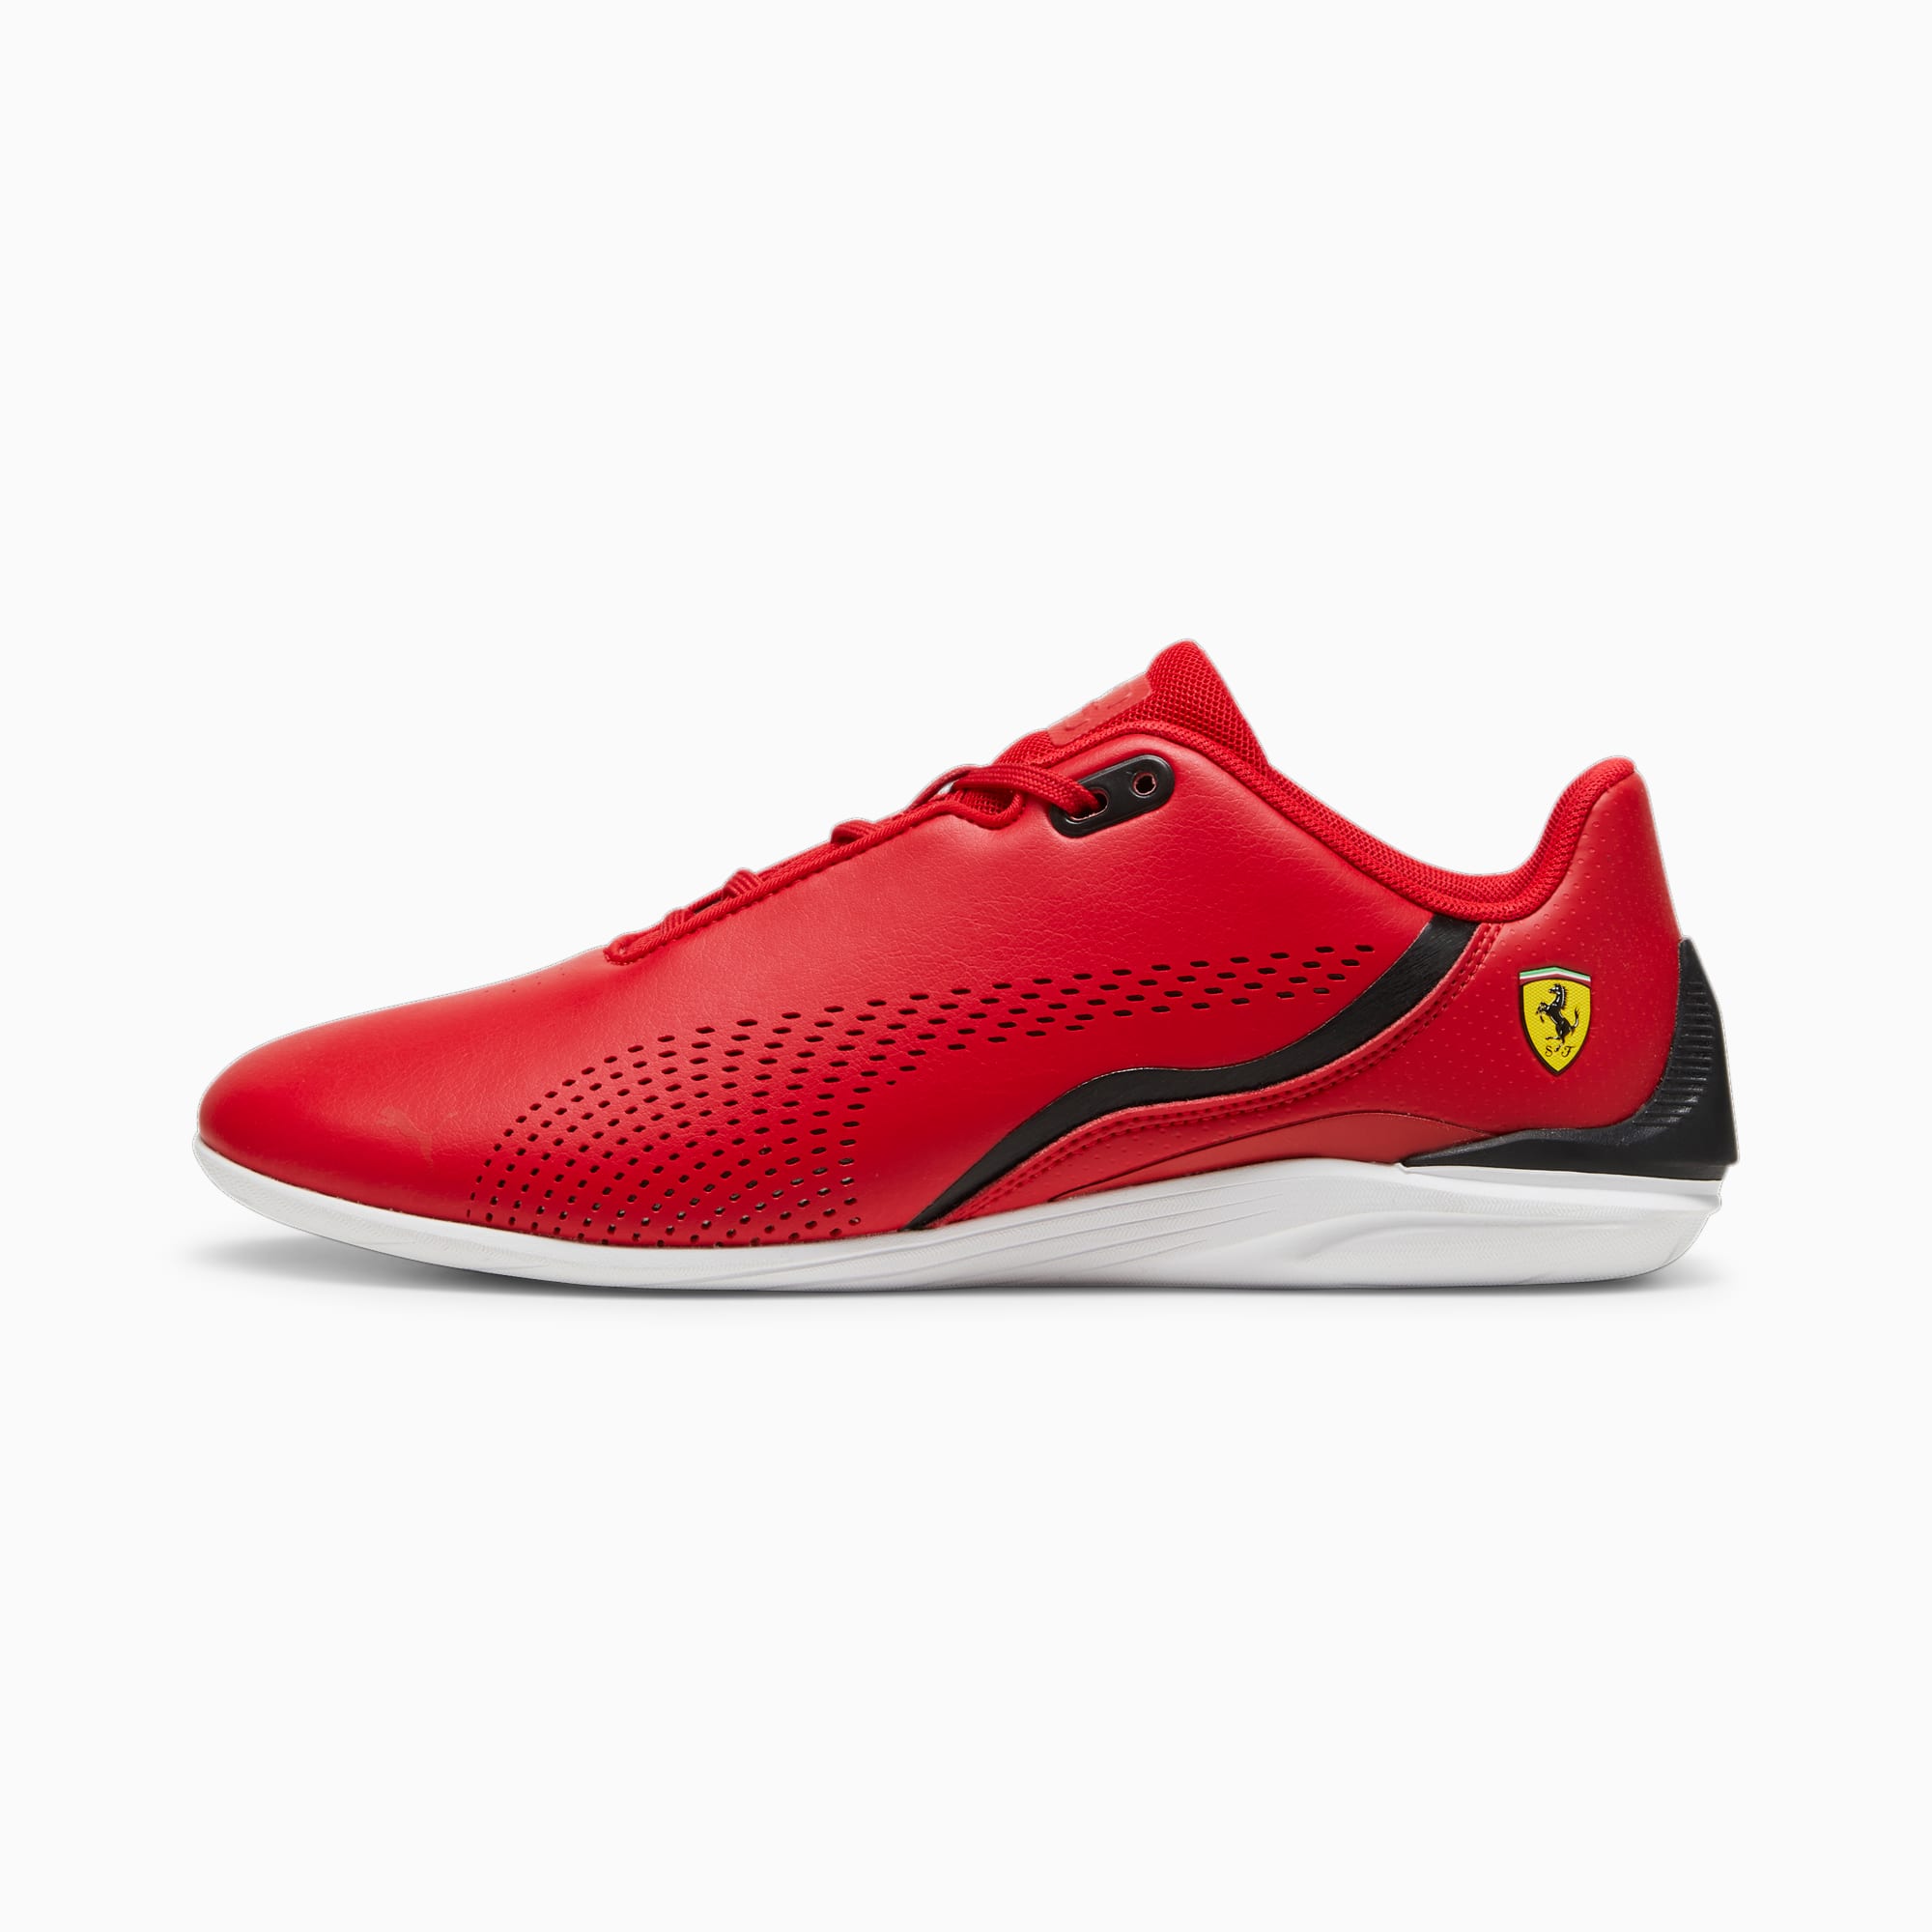 Women's PUMA Scuderia Ferrari Drift Cat Decima Motorsport Shoe Sneakers, Red, Size 35,5, Shoes